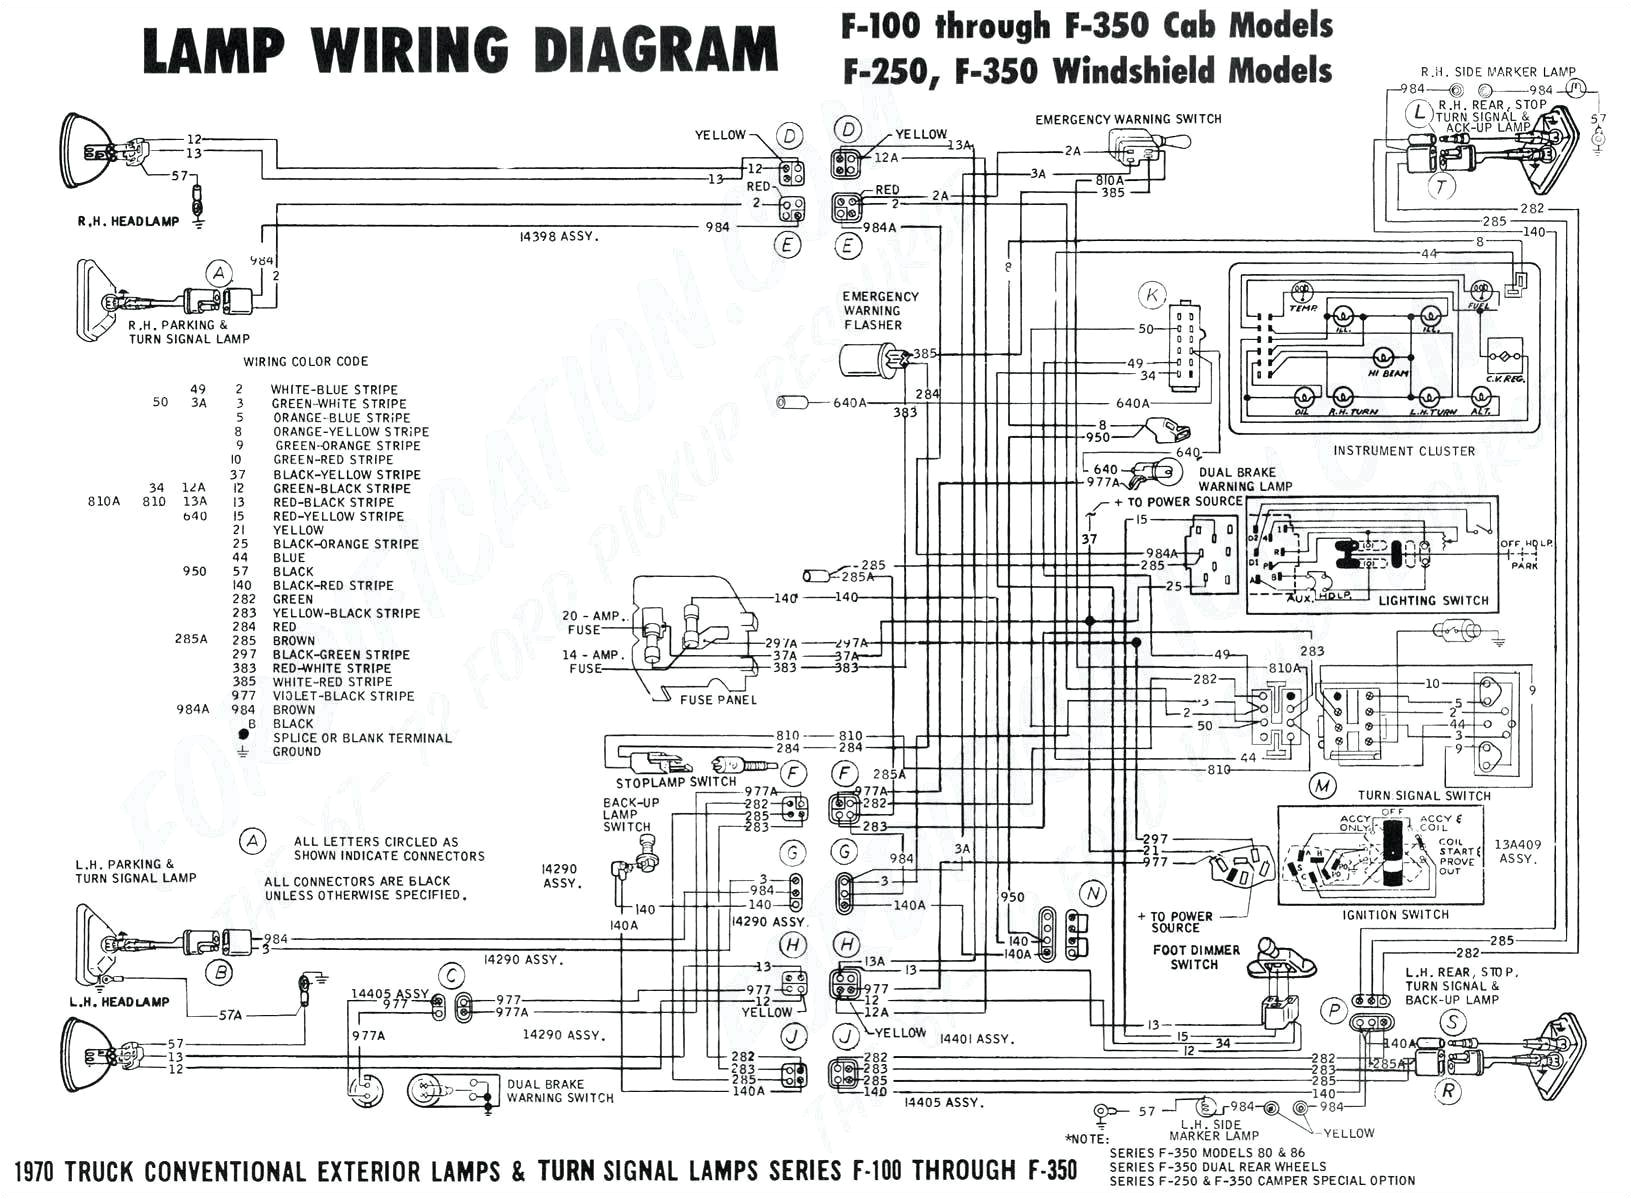 ab powerflex 70 wiring diagram wiring diagram database 16 fresh powerflex 70 wiring diagram